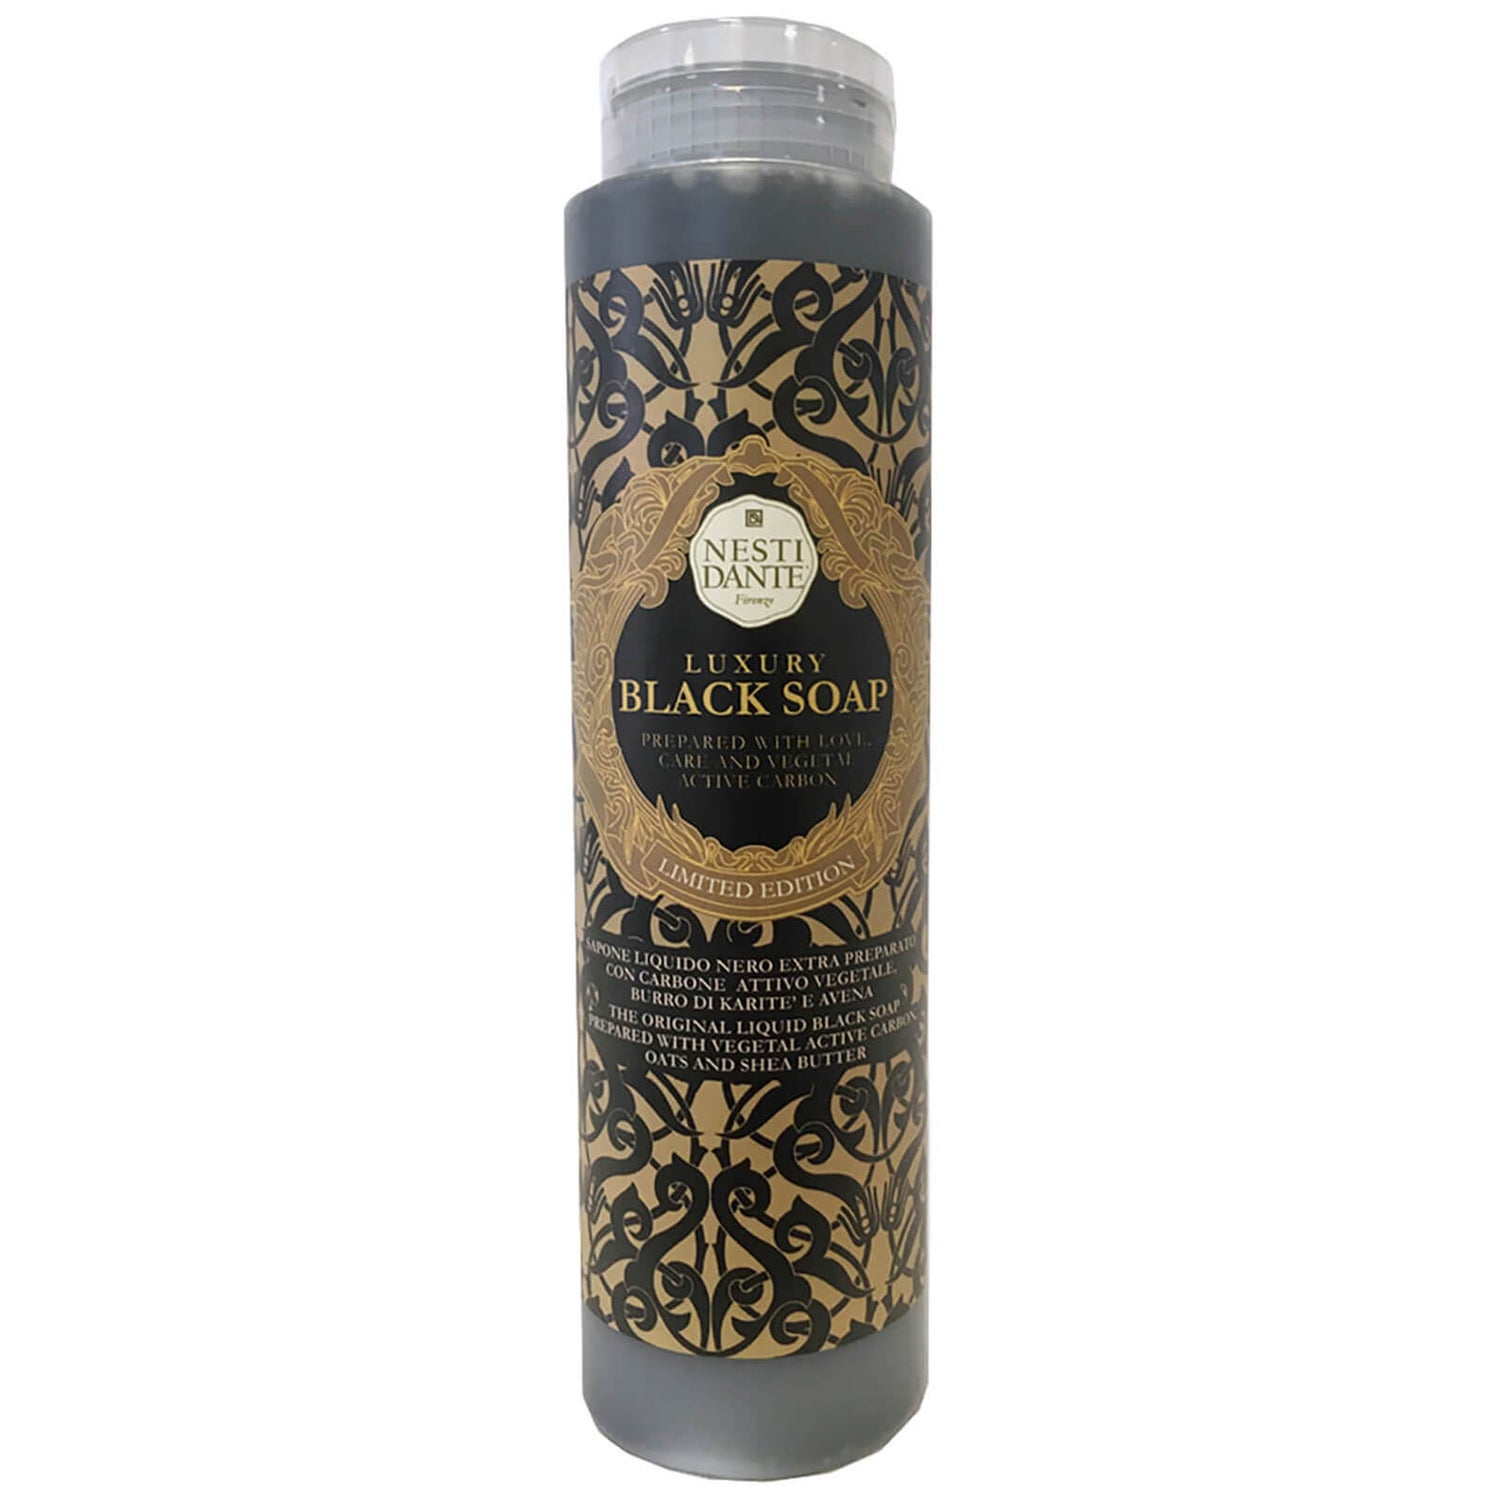 Gel de ducha con jabón negro Luxury de Nesti Dante 300 ml